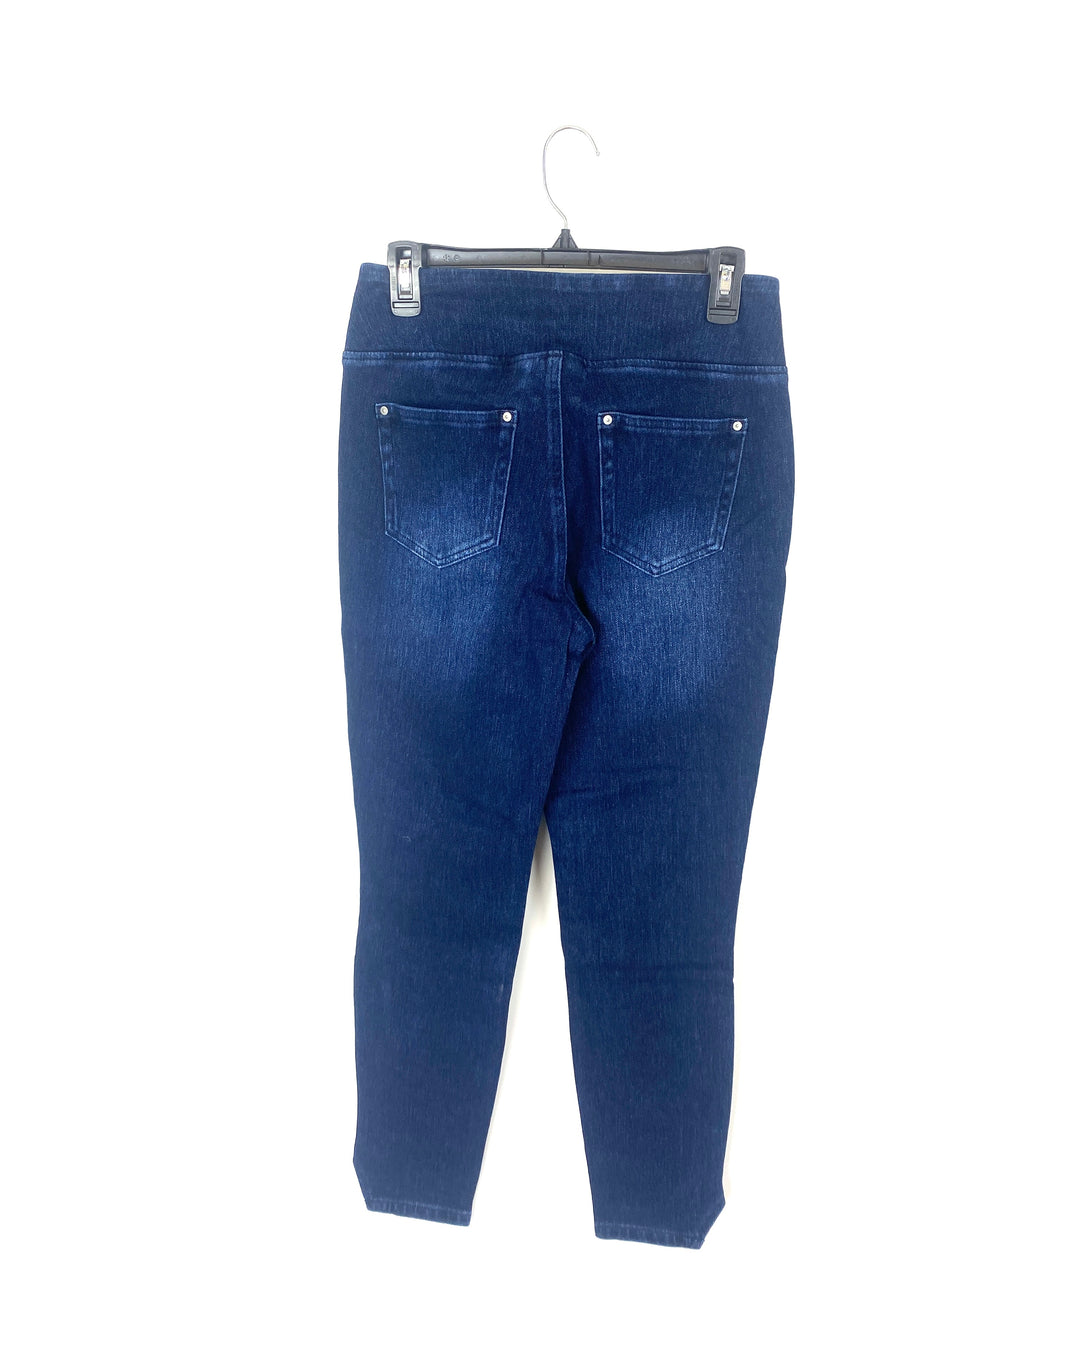 Dark Blue Wash Jeans With Open Bottom Slit  - Size 6/8